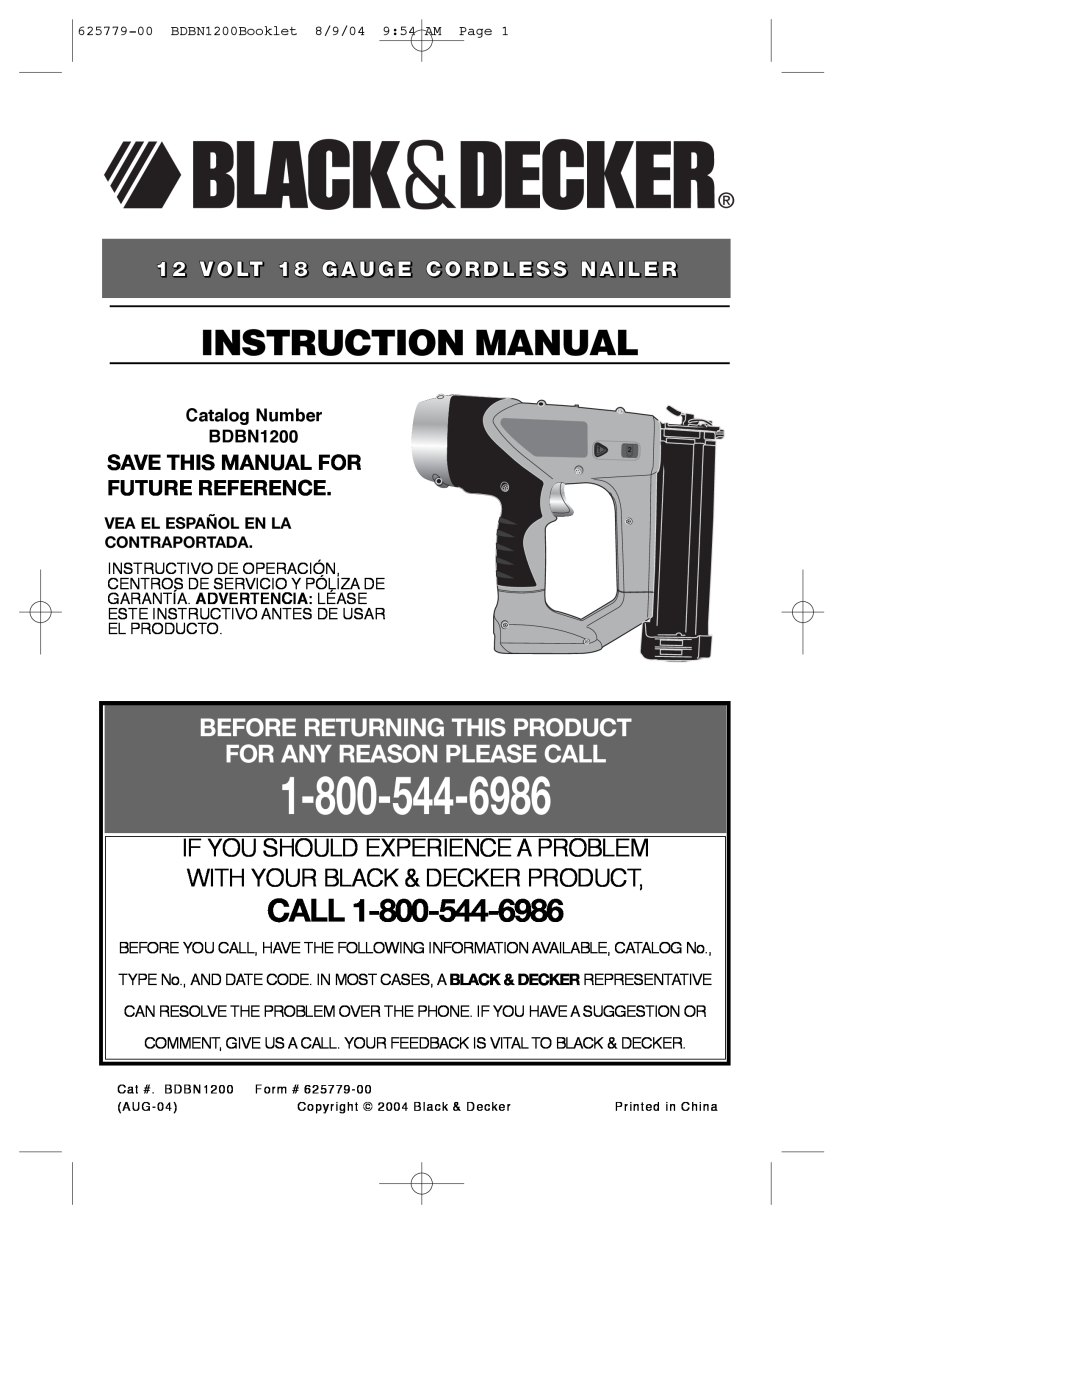 Black & Decker instruction manual 1 2 V O LT 1 8 G A U G E C O R D L E S S N A I L E R, Catalog Number BDBN1200, Call 